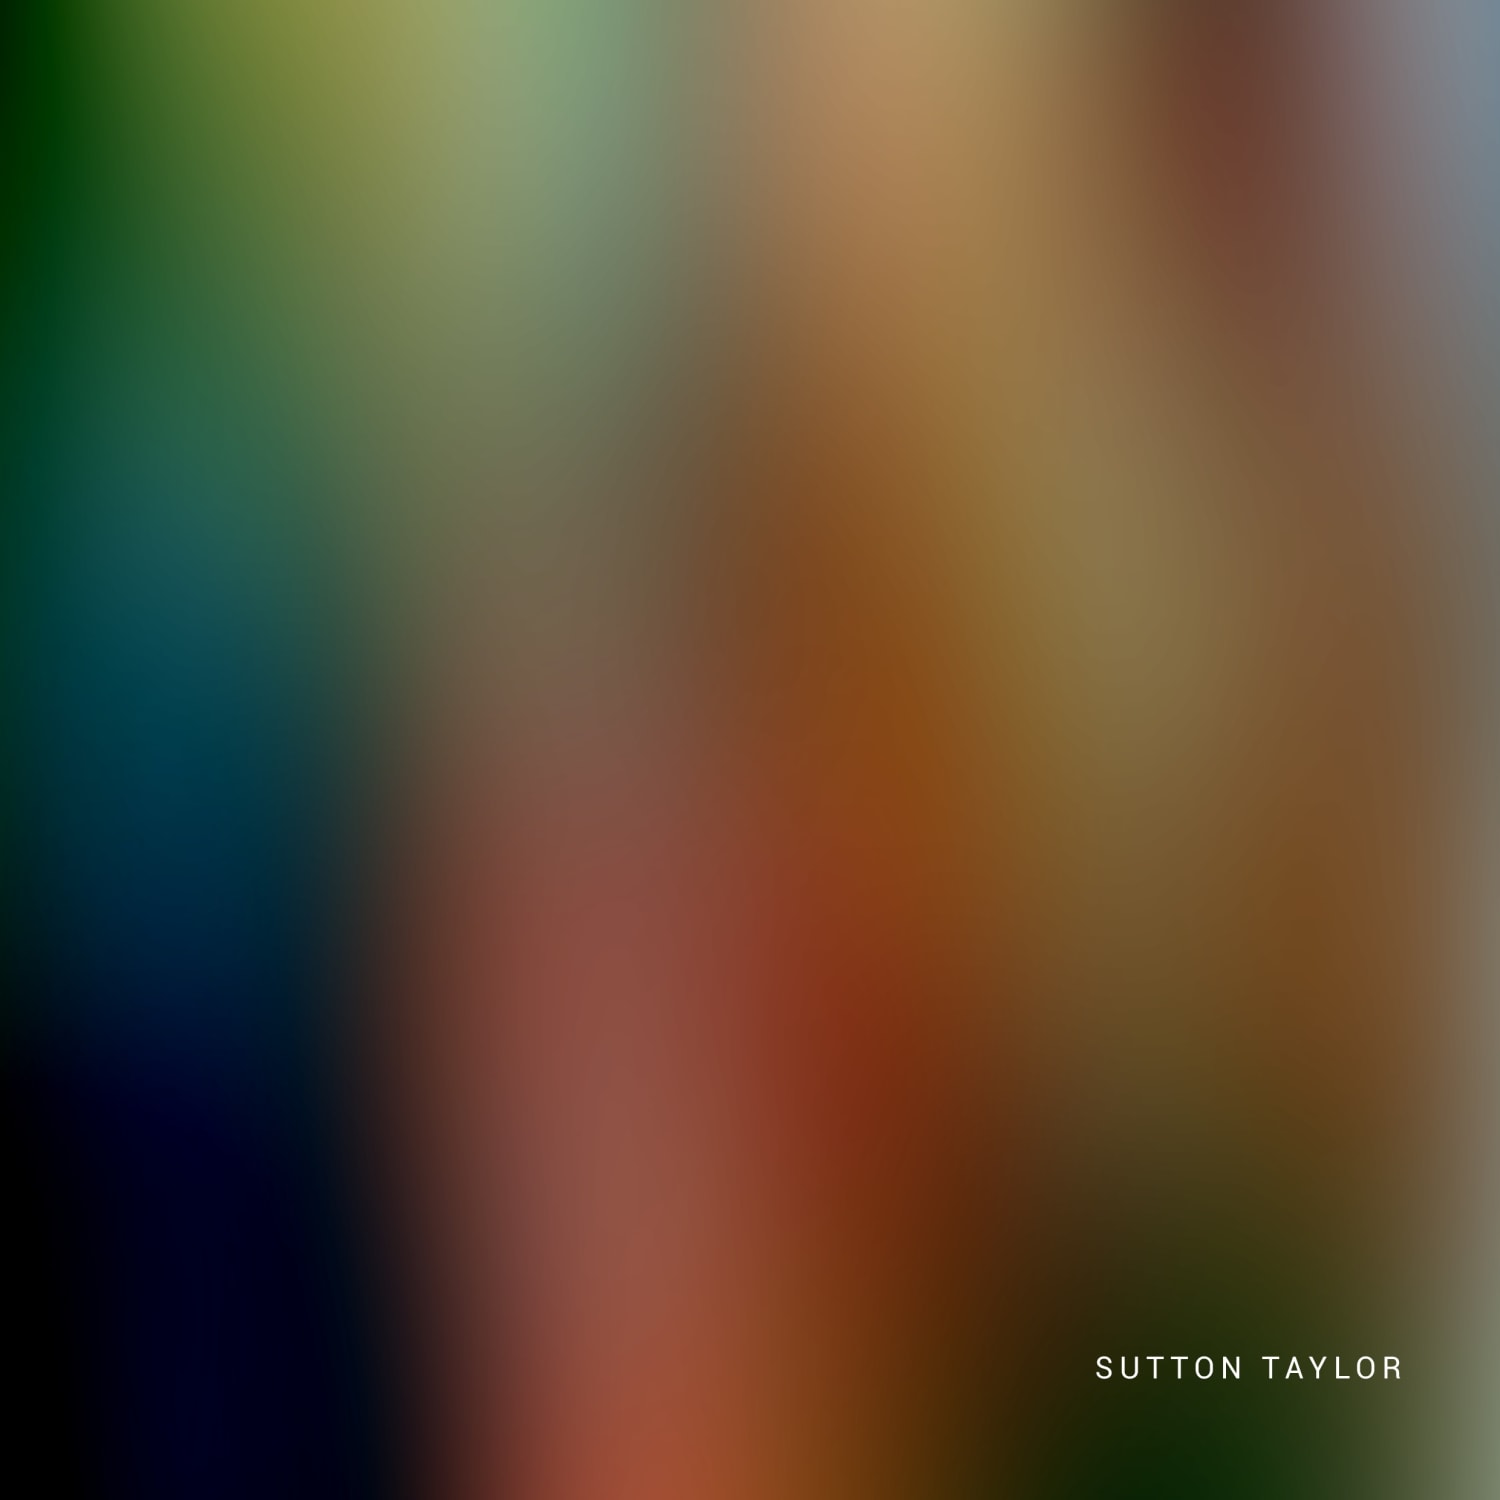 SUTTON TAYLOR / SOLO EXHIBITION